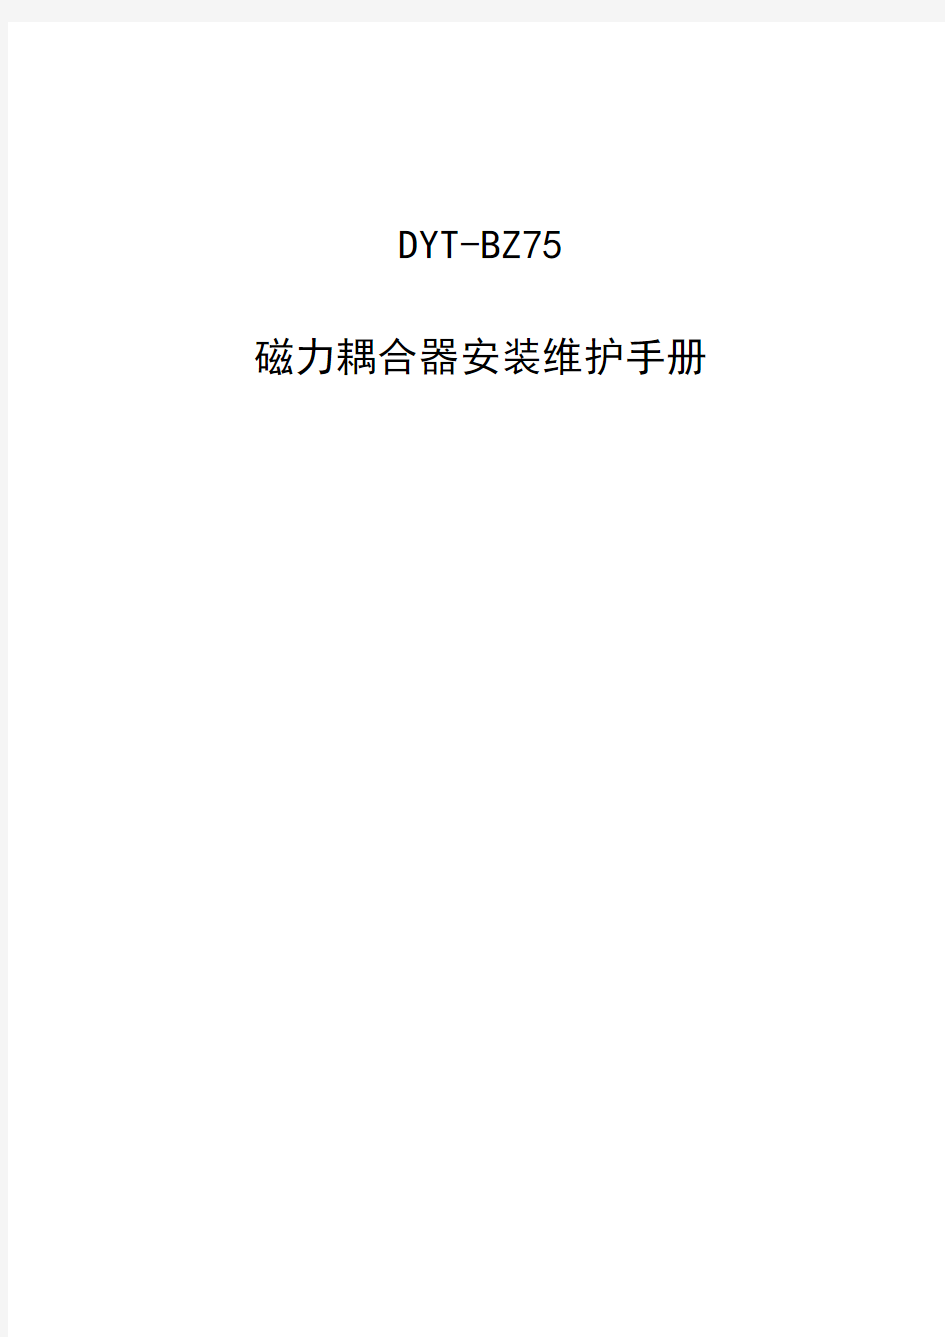 DYT BZ 磁力耦合器安装维护手册(DYT-BZ75)